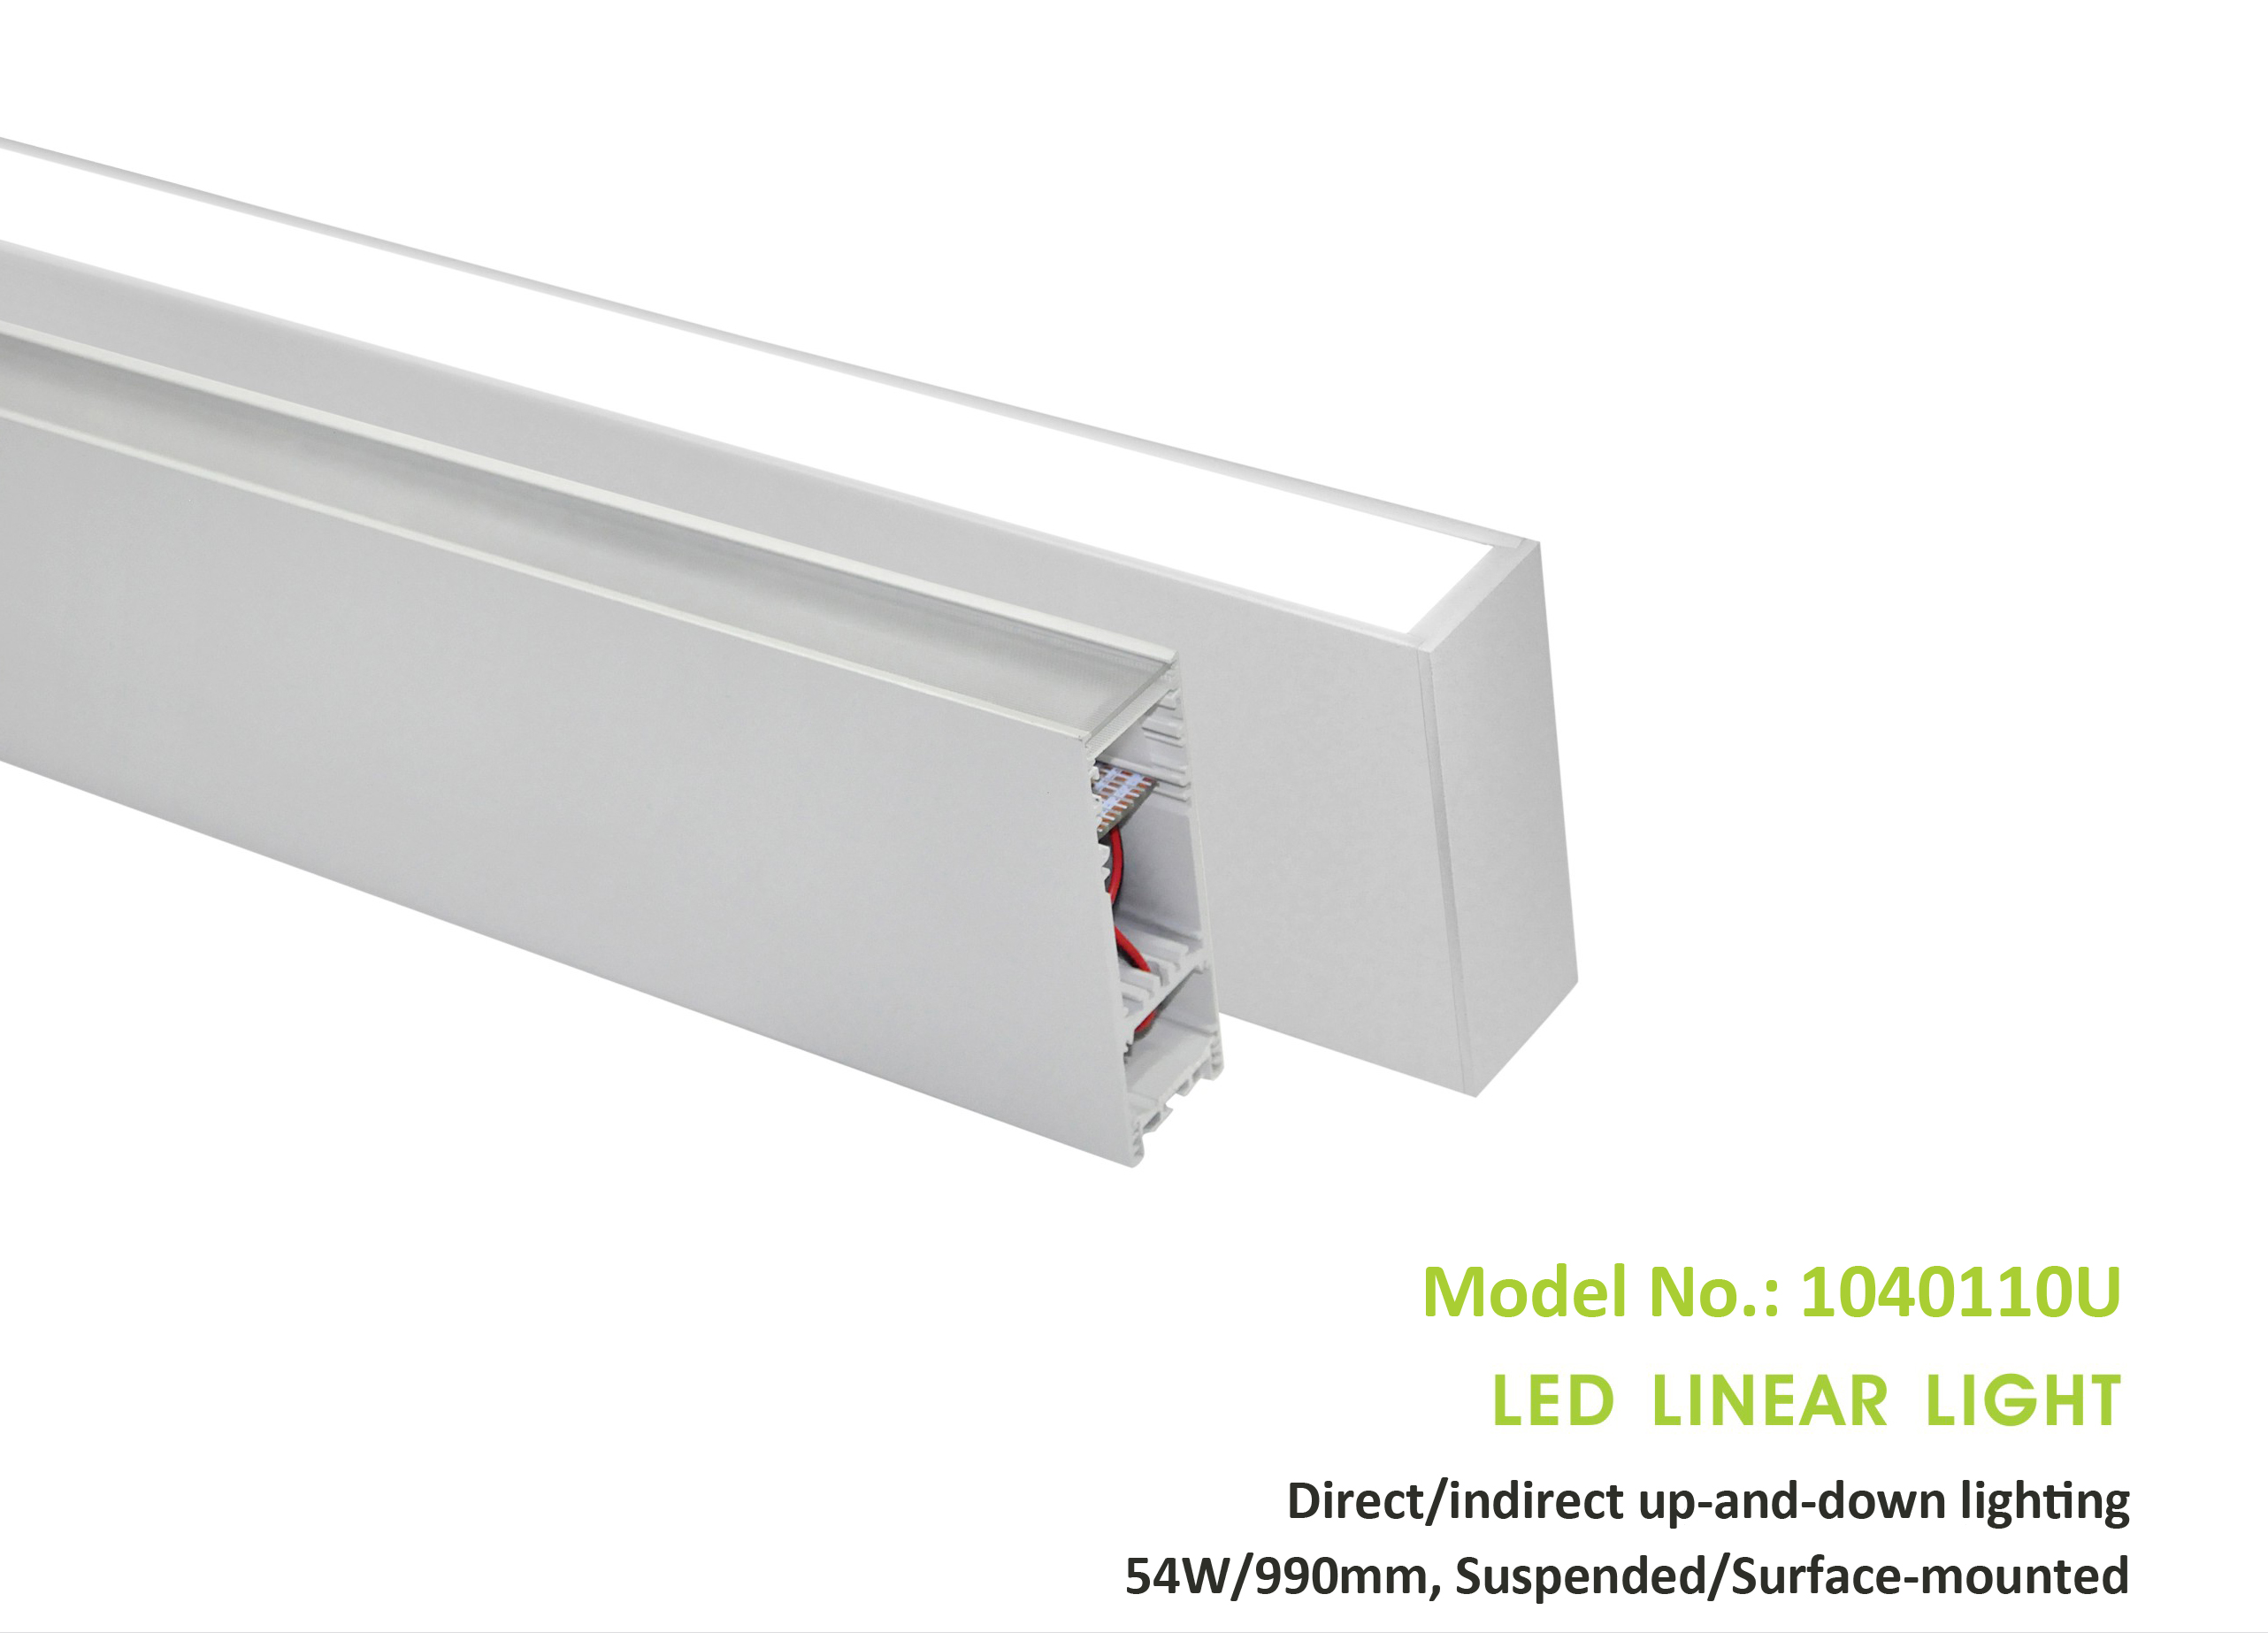 Direct/indirect Led Linear Light 1040110U, 54W/990mm